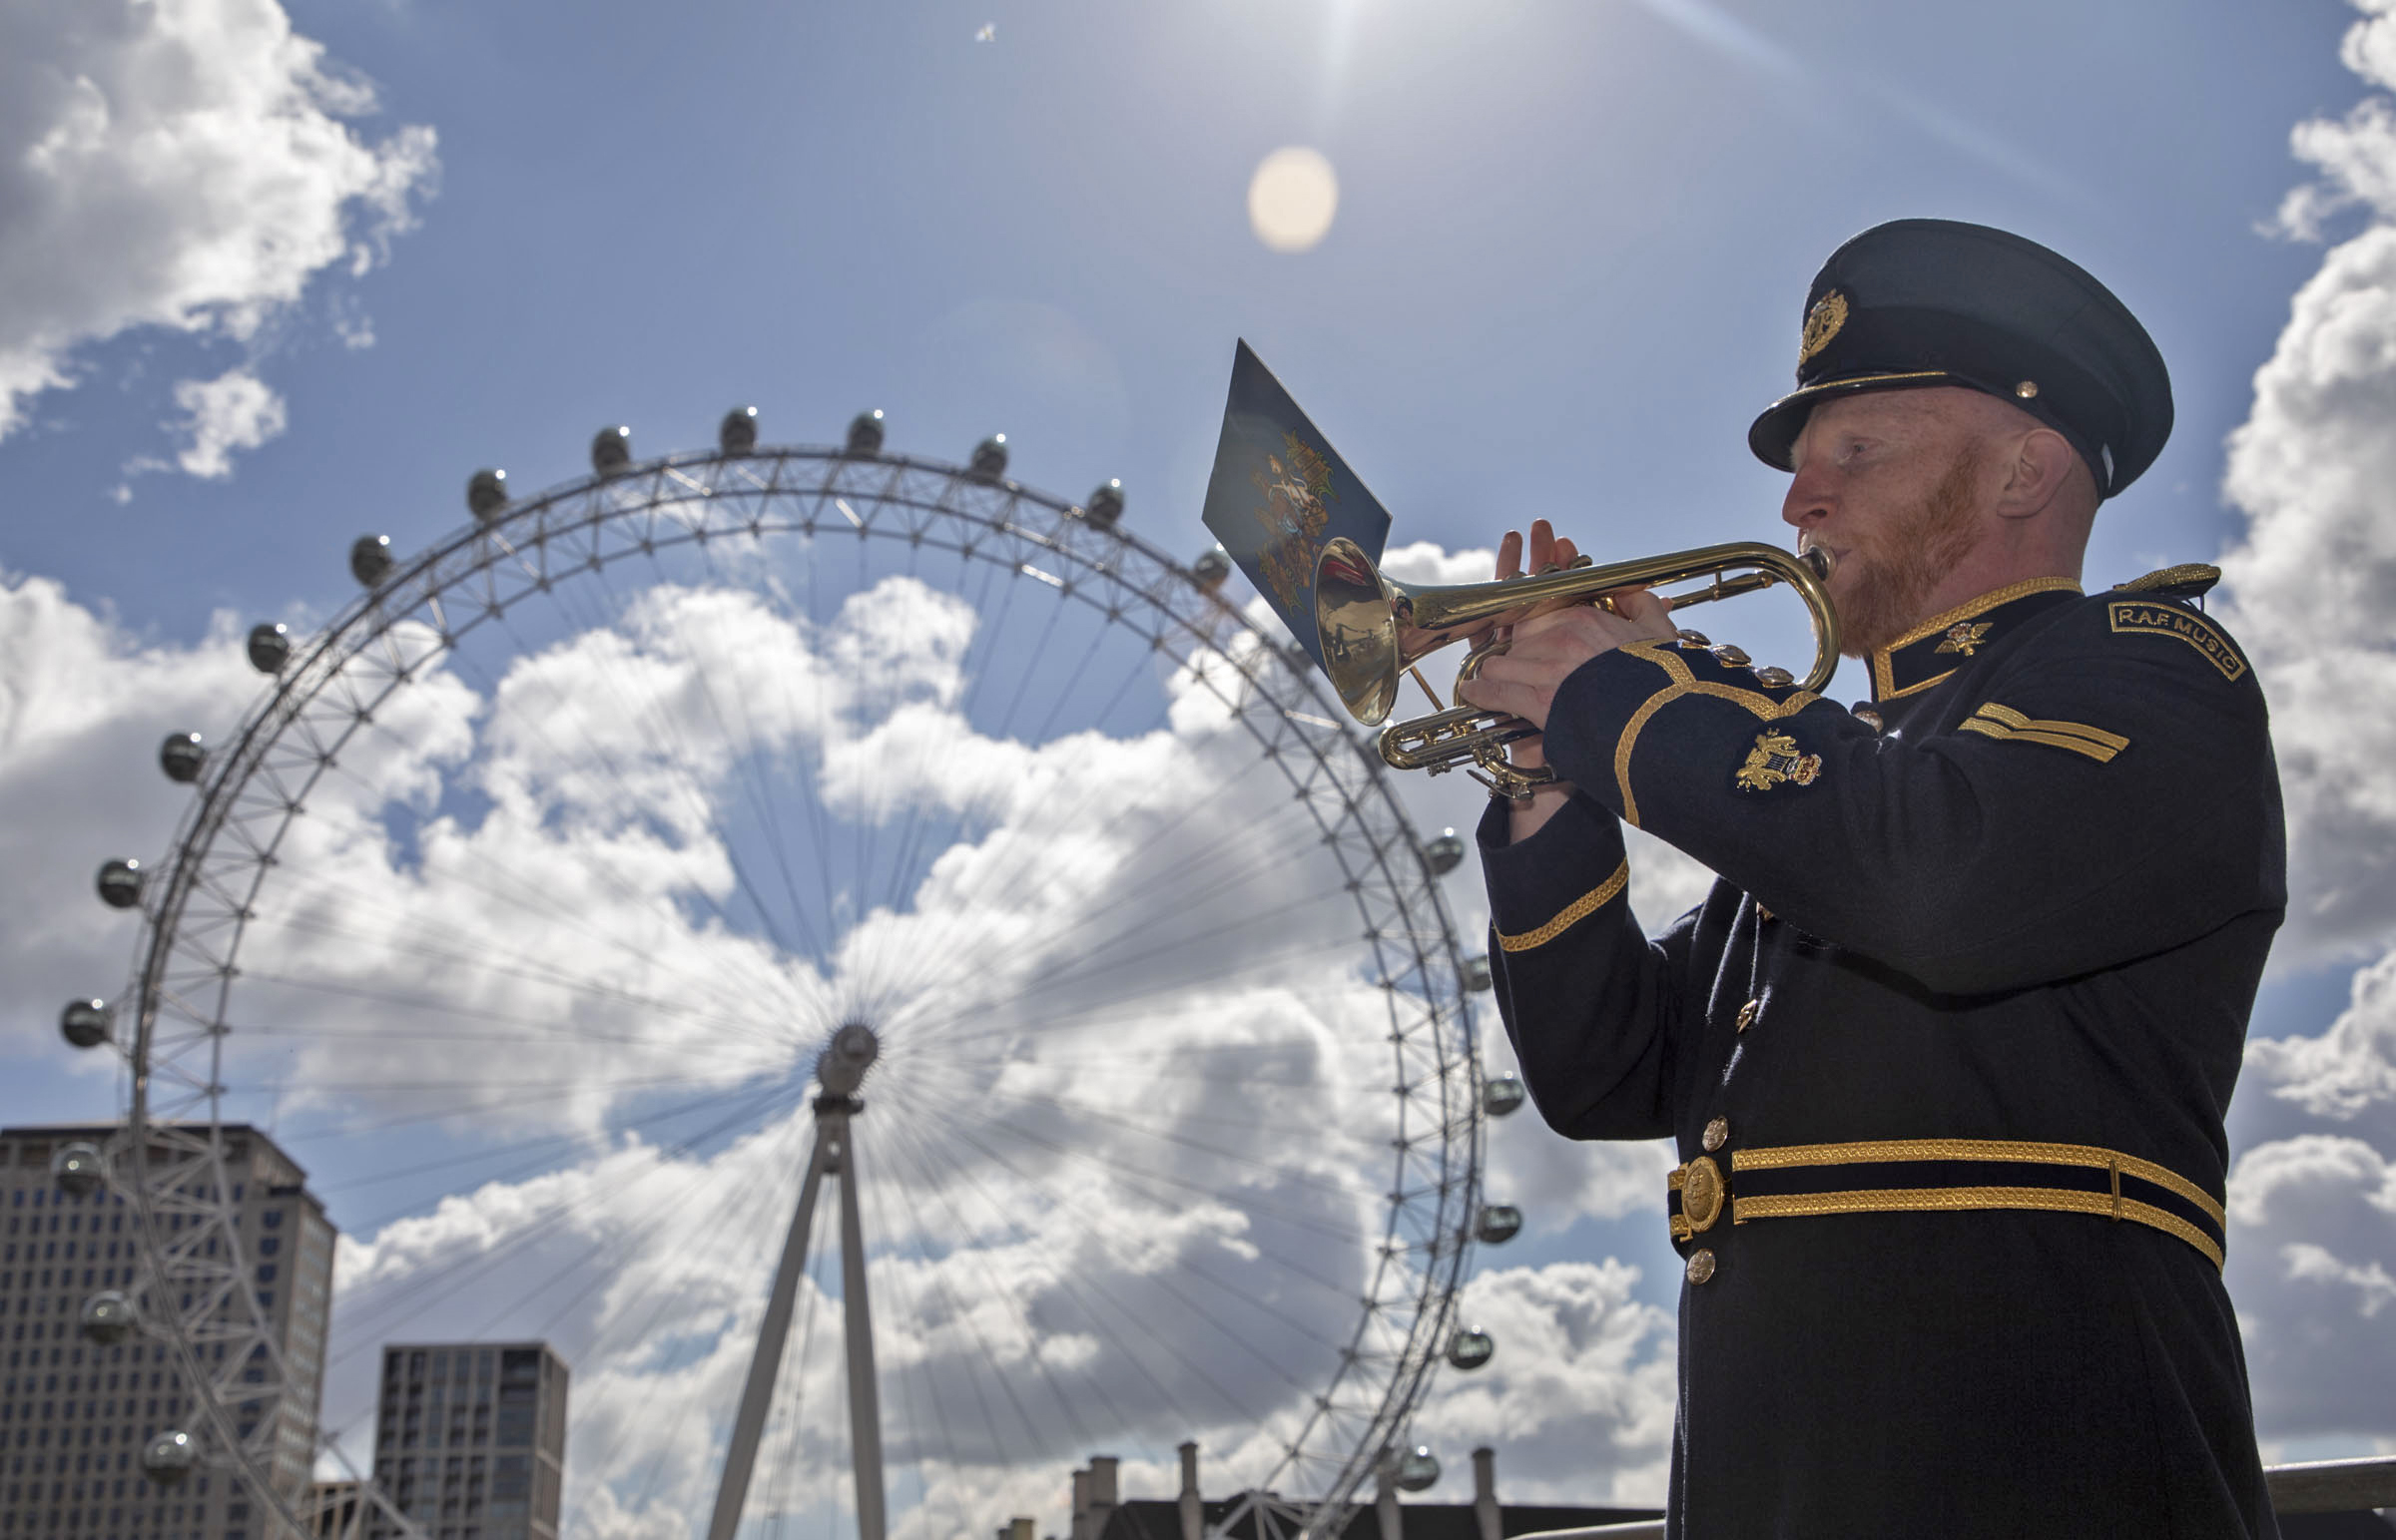 RAF Musician plays trumpet by London Eye.